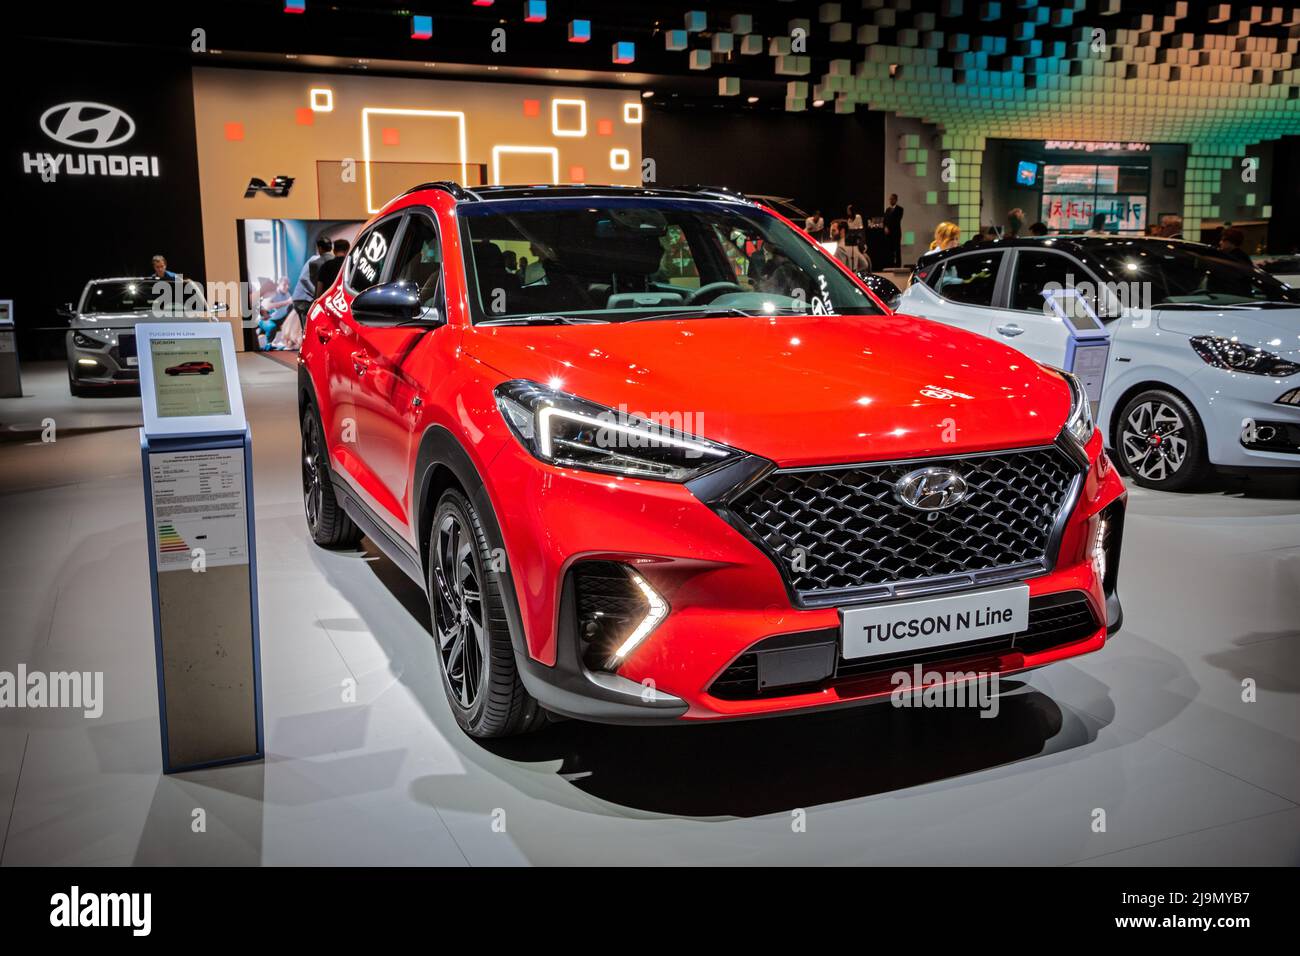 Hyundai Tucson N-Line car showcased at the Frankfurt IAA Motor Show. Germany - September 11, 2019 Stock Photo